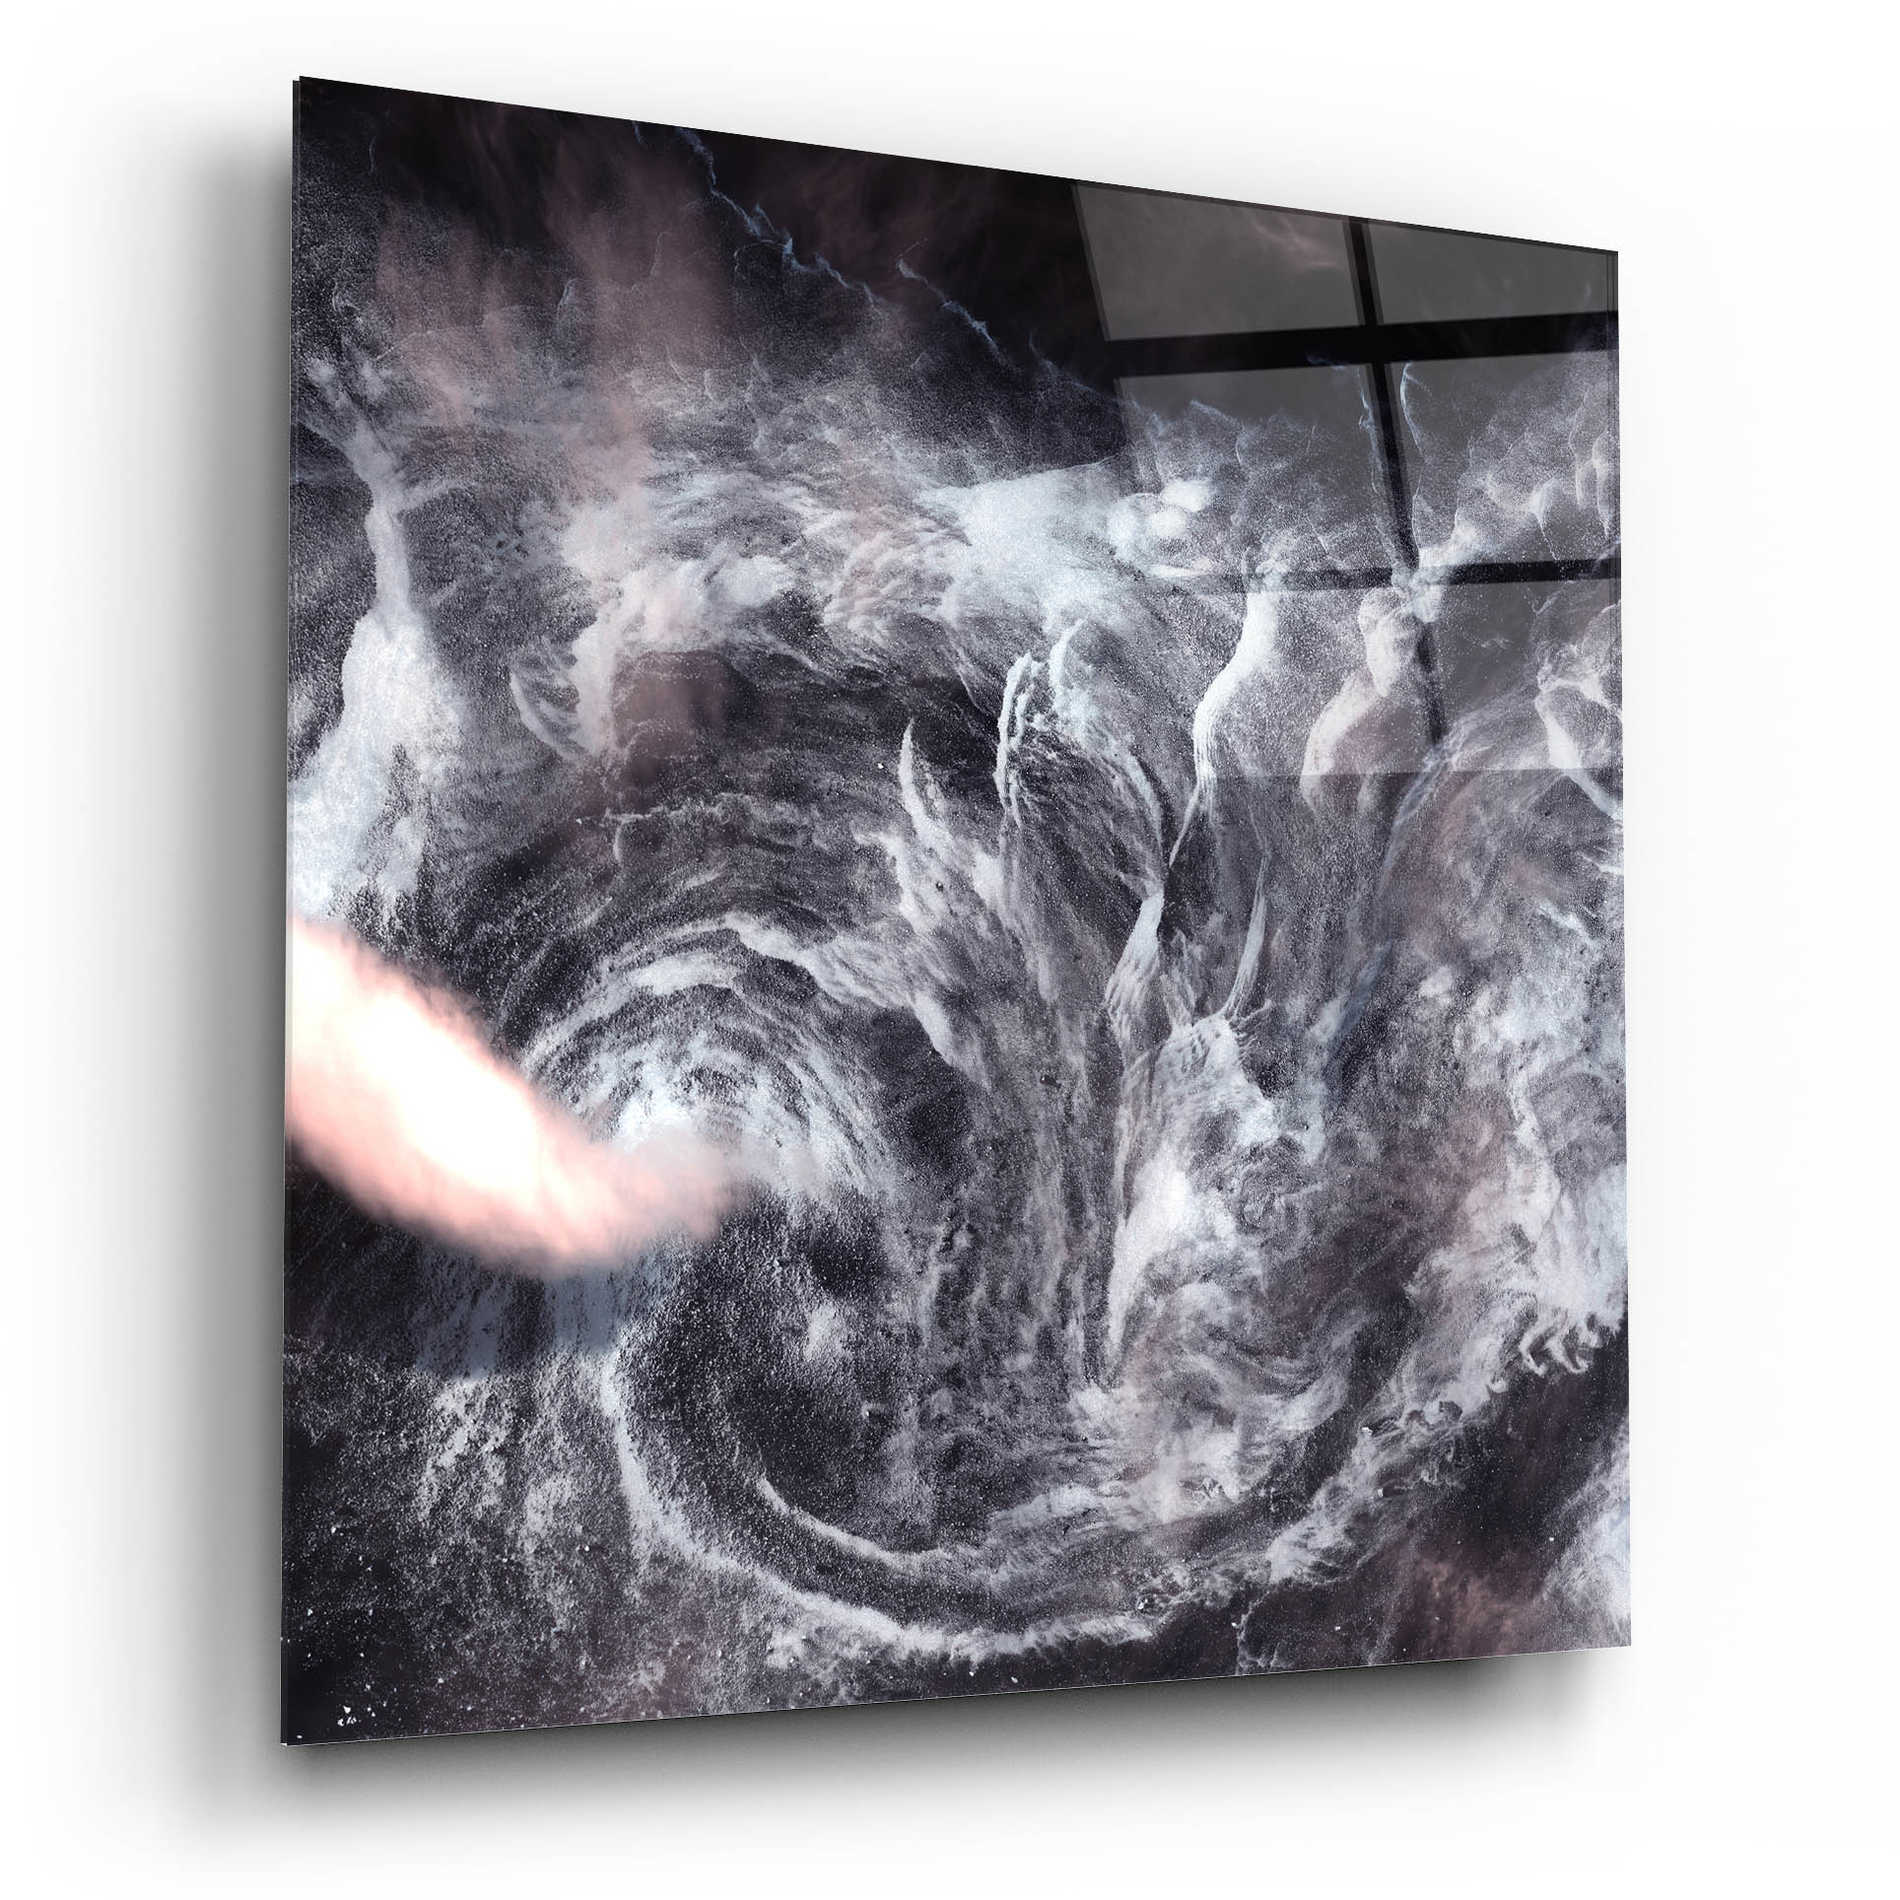 Epic Art 'Earth as Art: Whirlpool in the Air' Acrylic Glass Wall Art,12x12